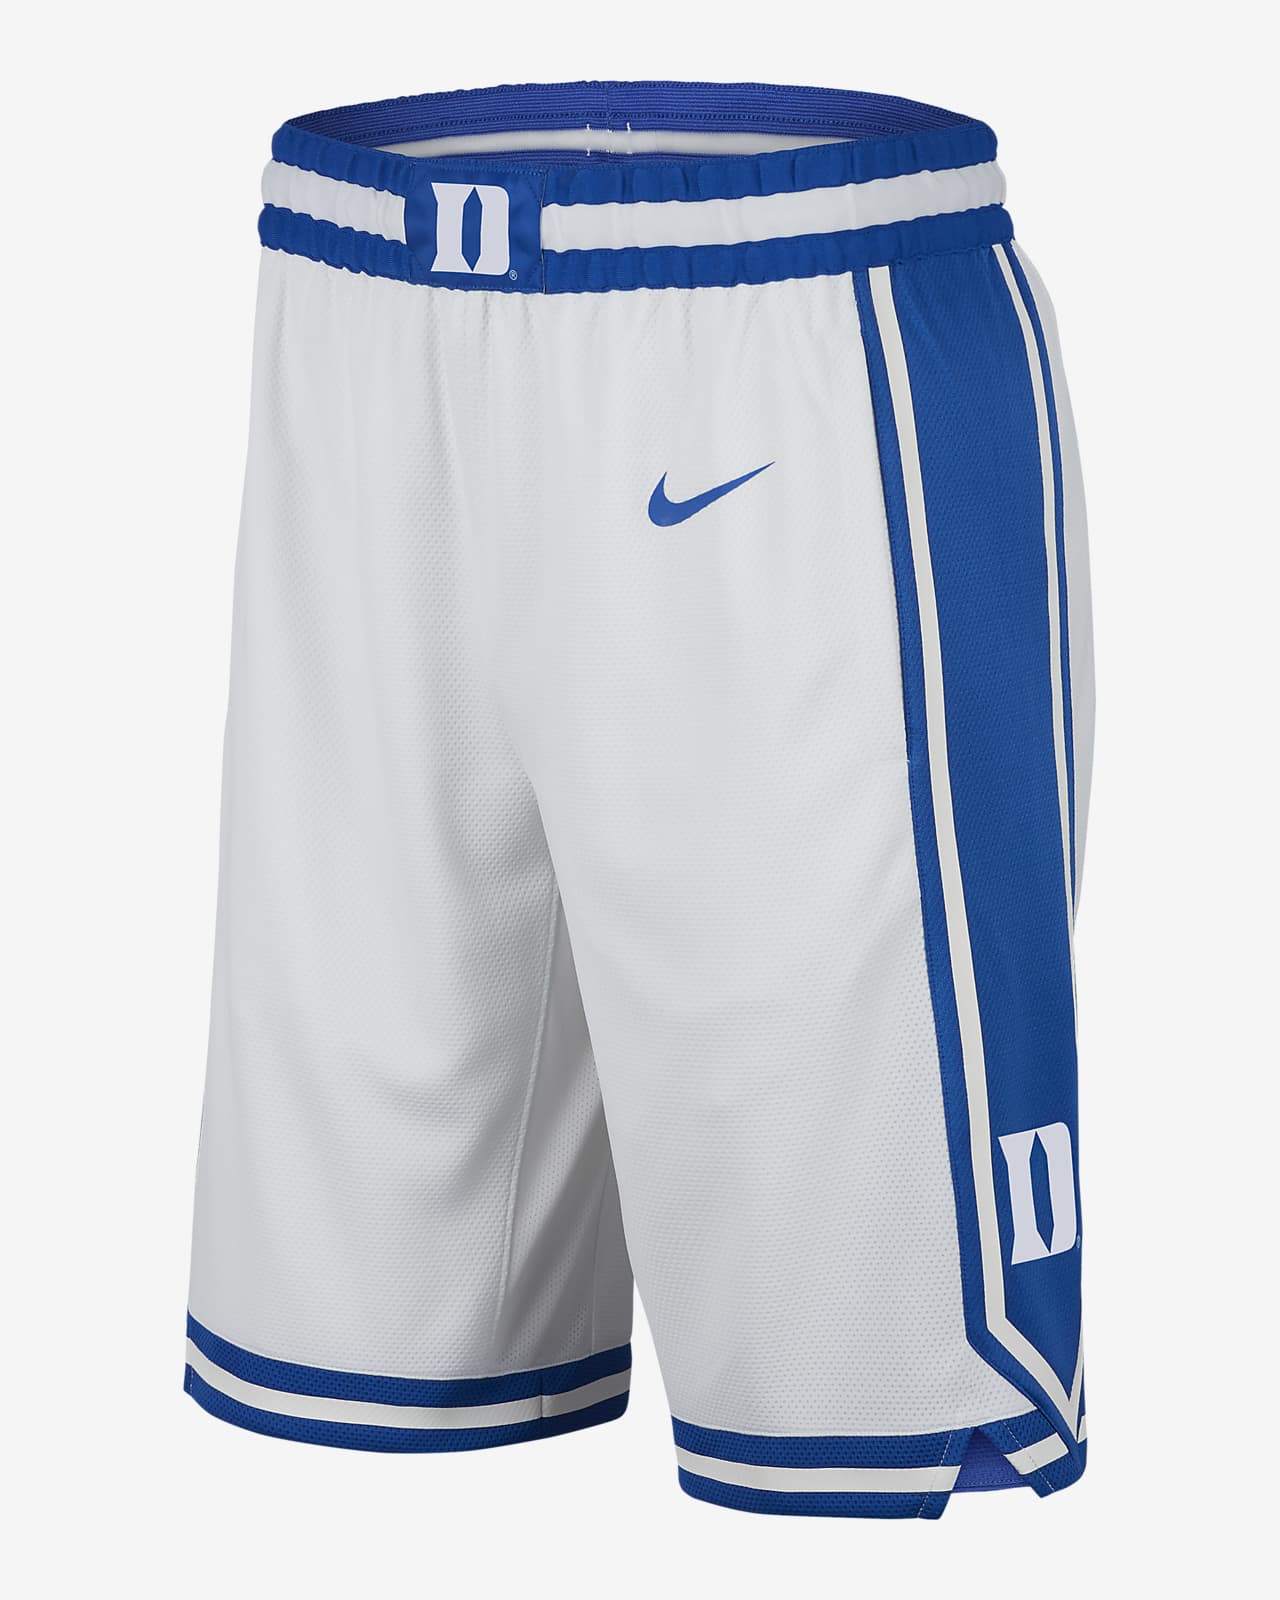 Nike College (Duke) Men's Replica Basketball Shorts